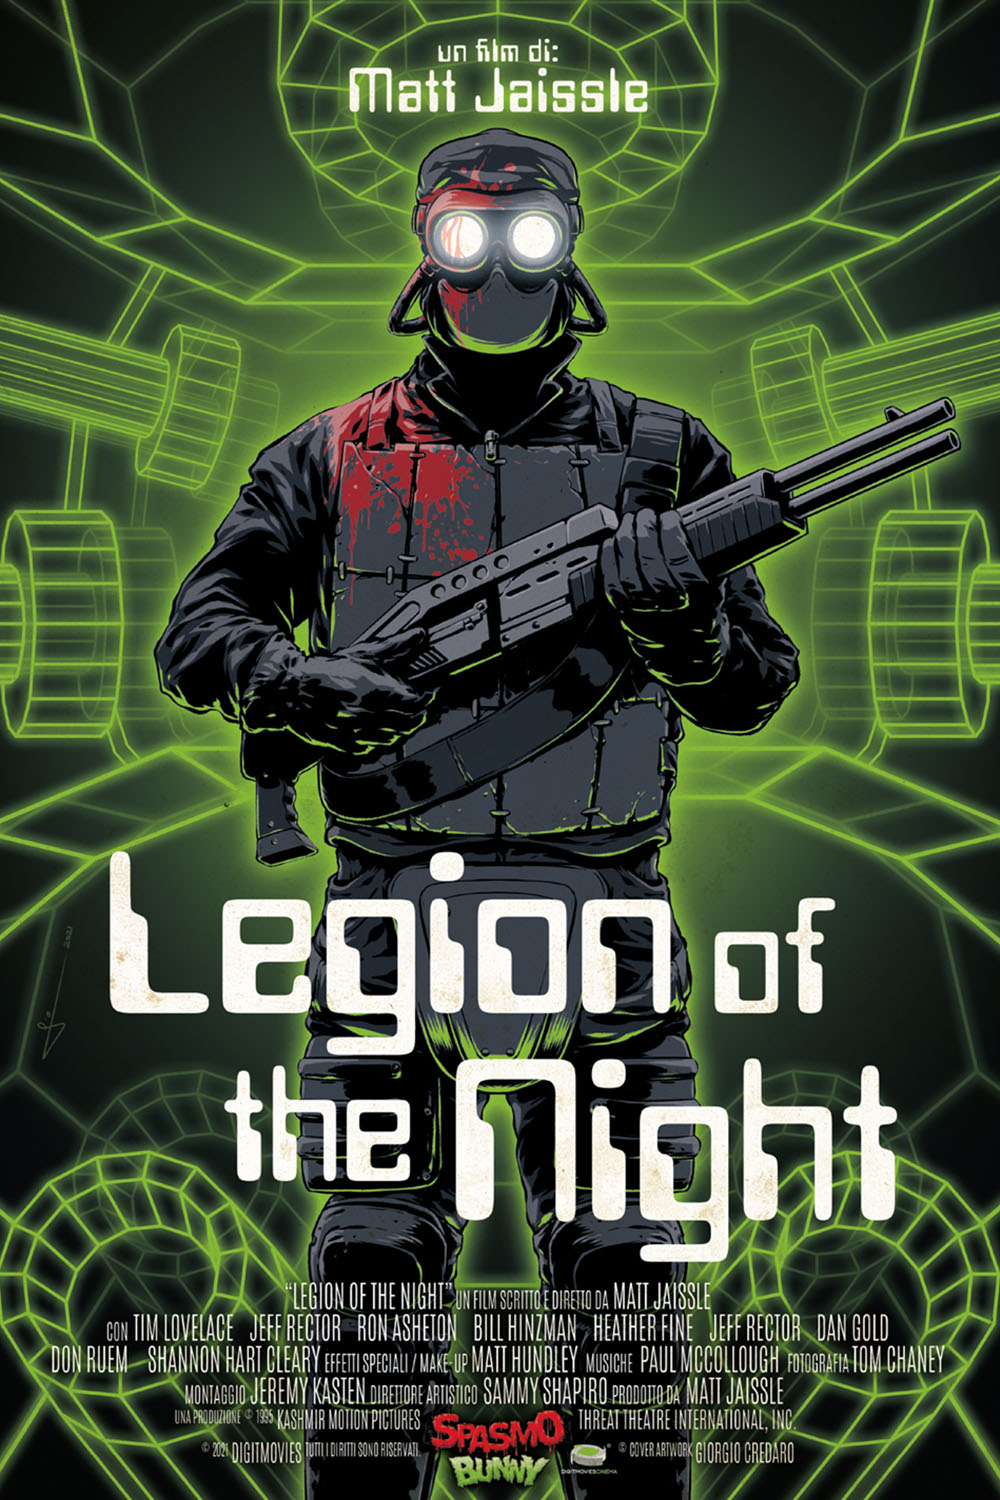 Legion Of The Night (DVD)